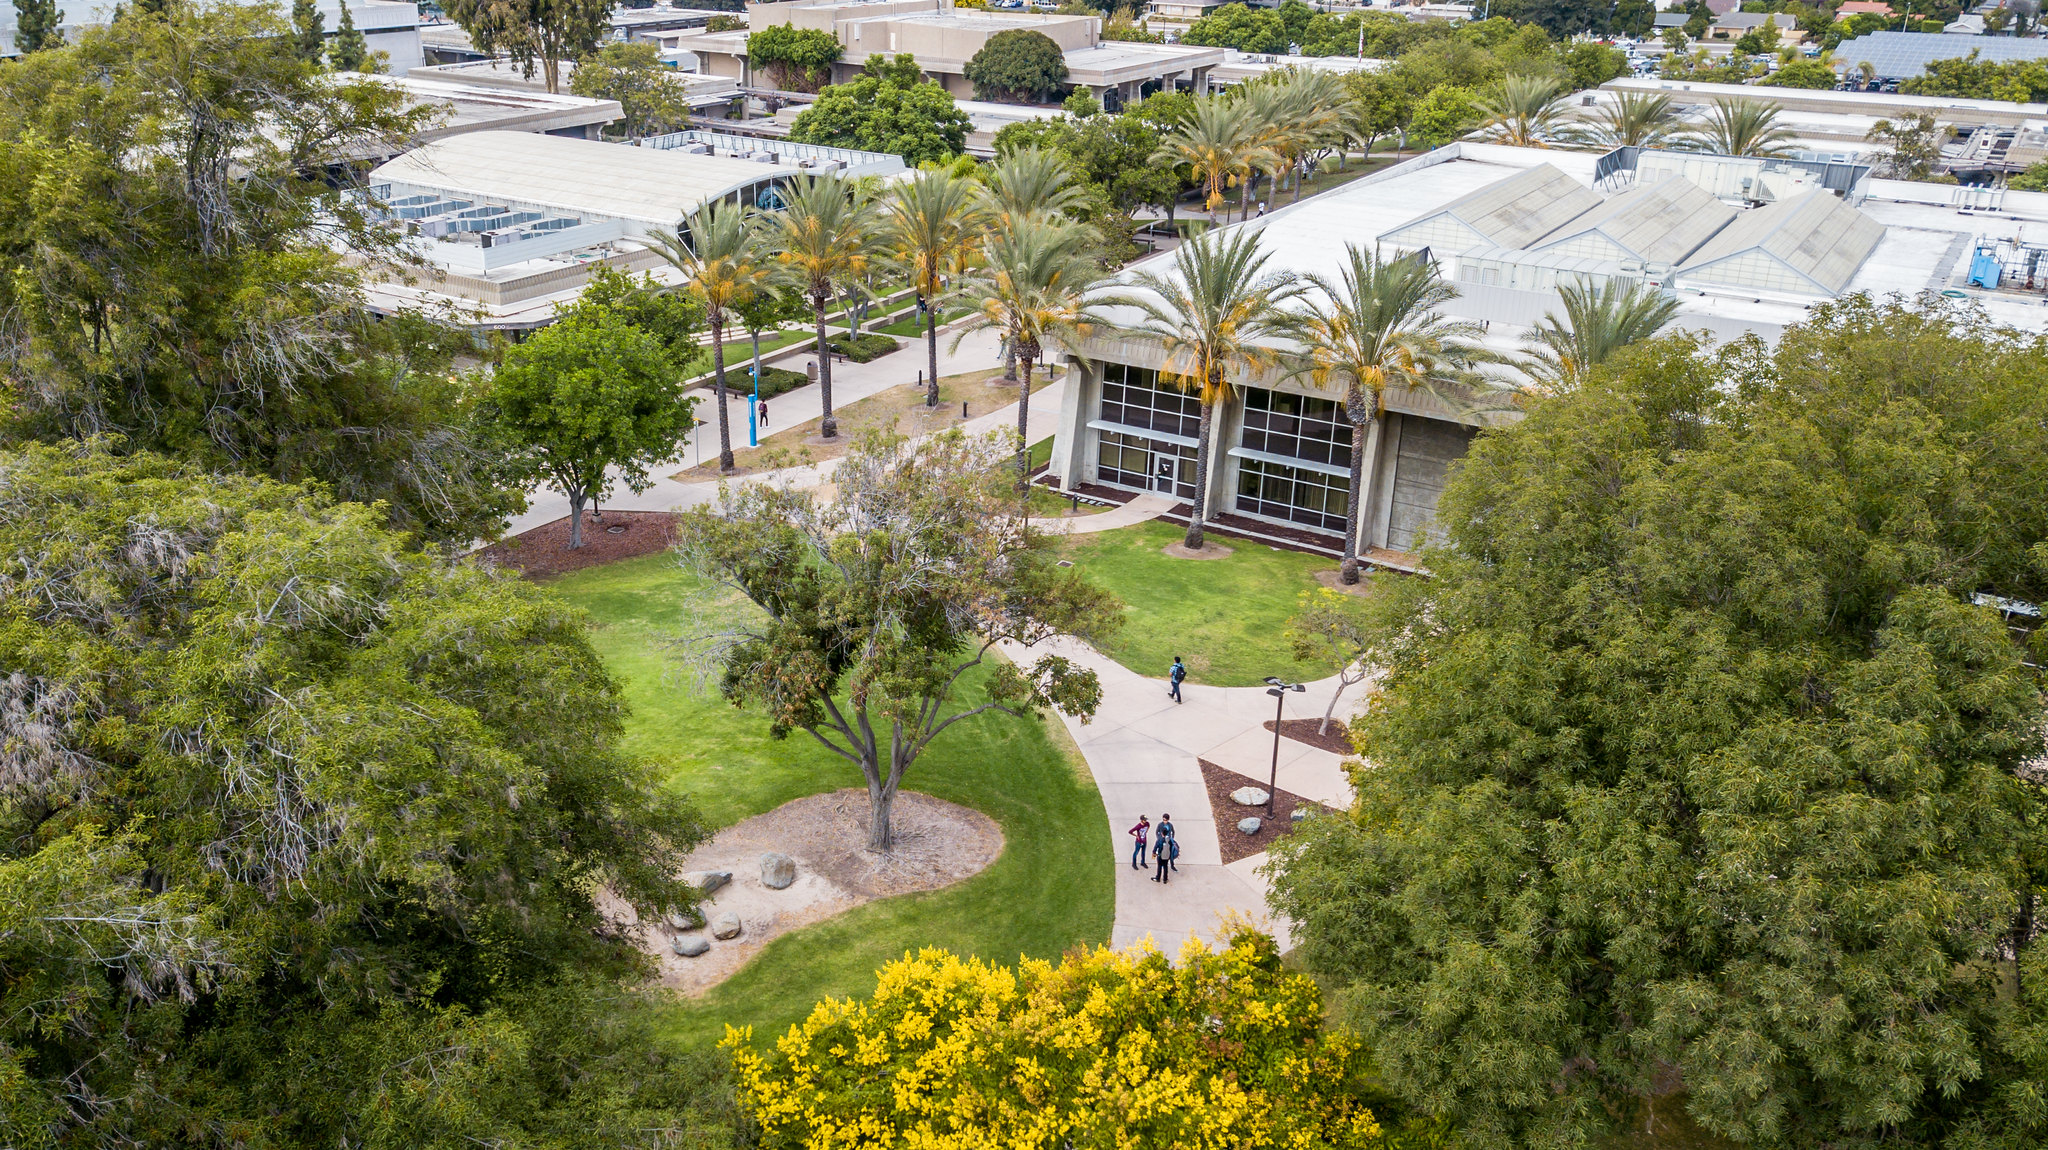 An aerial shot of the Chula Vista campus.